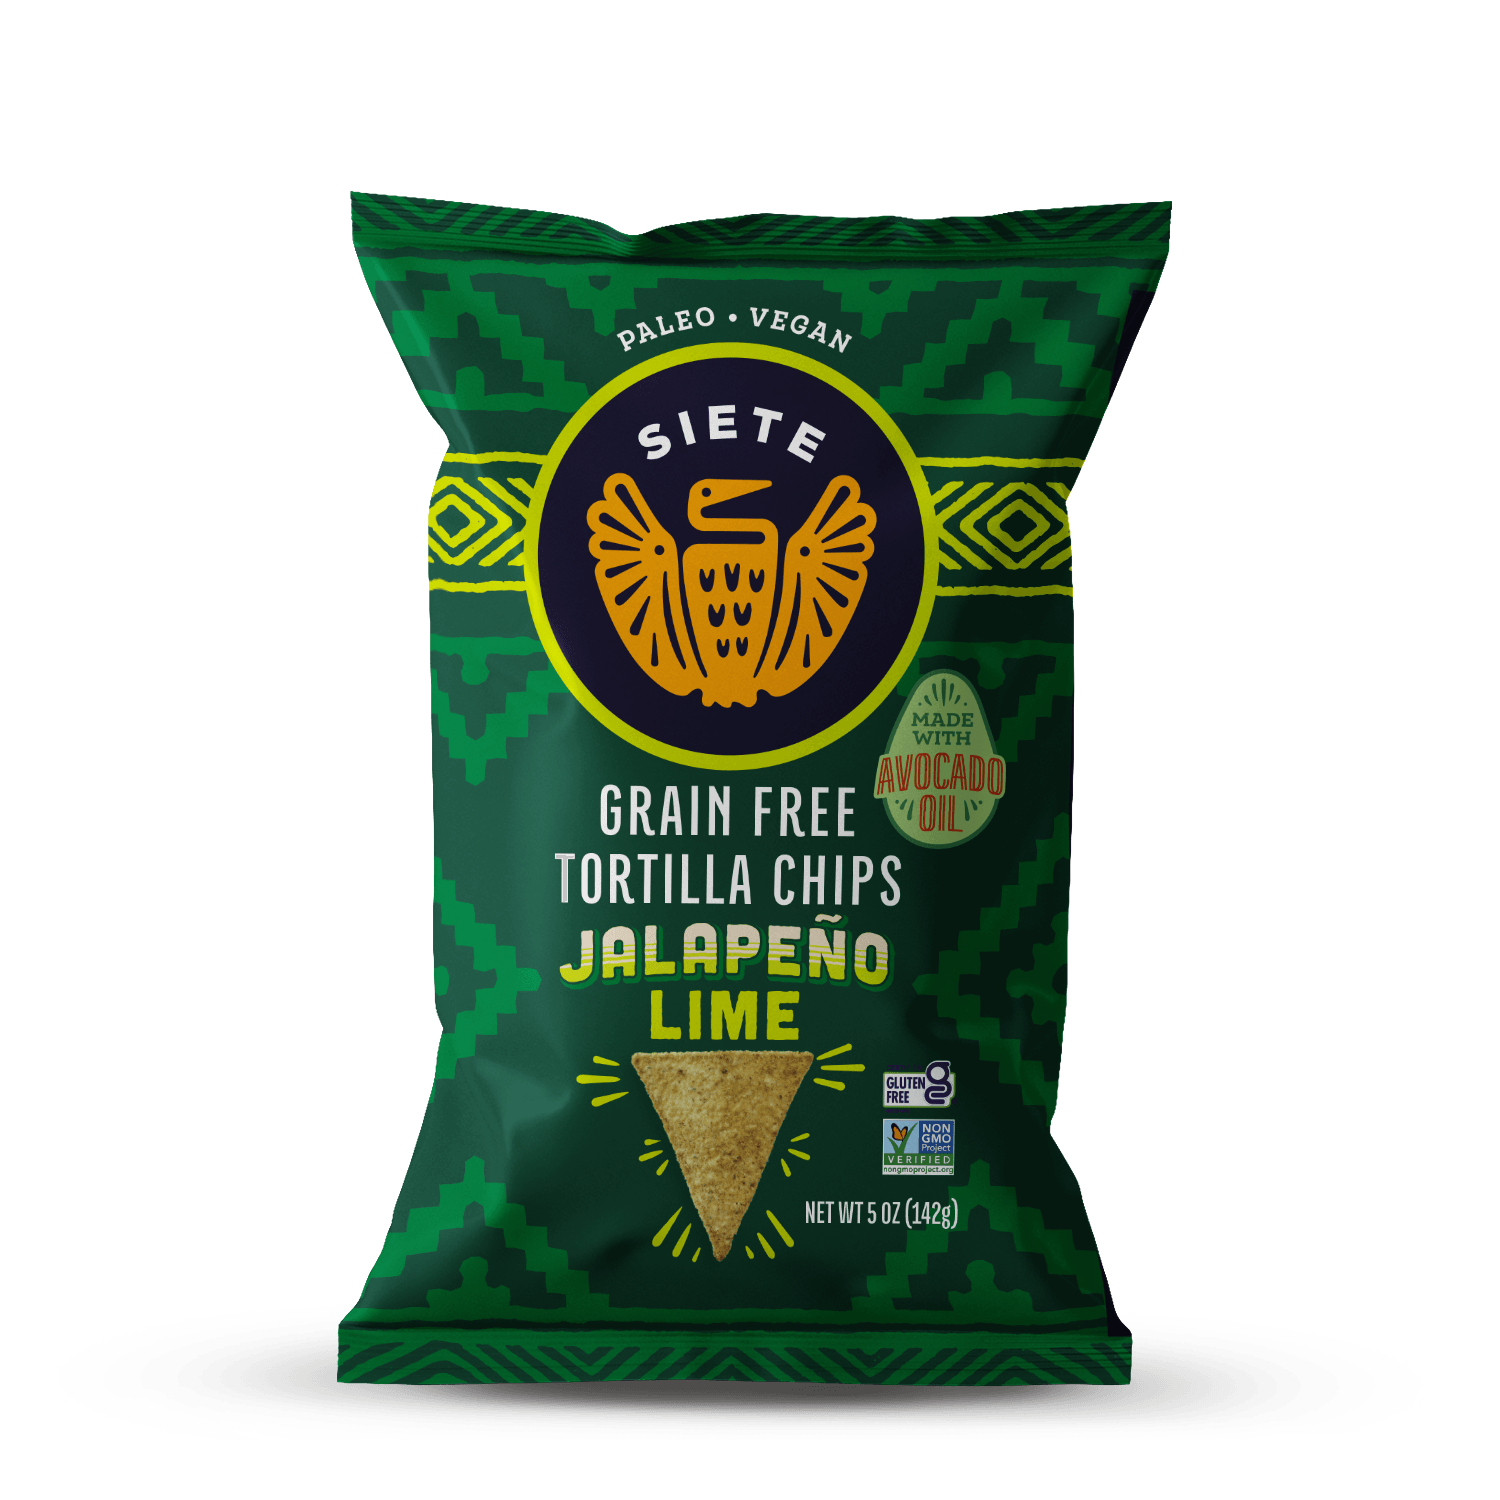 Jalapeño Lime Grain Free Tortilla Chips 5 oz - 6 Bags